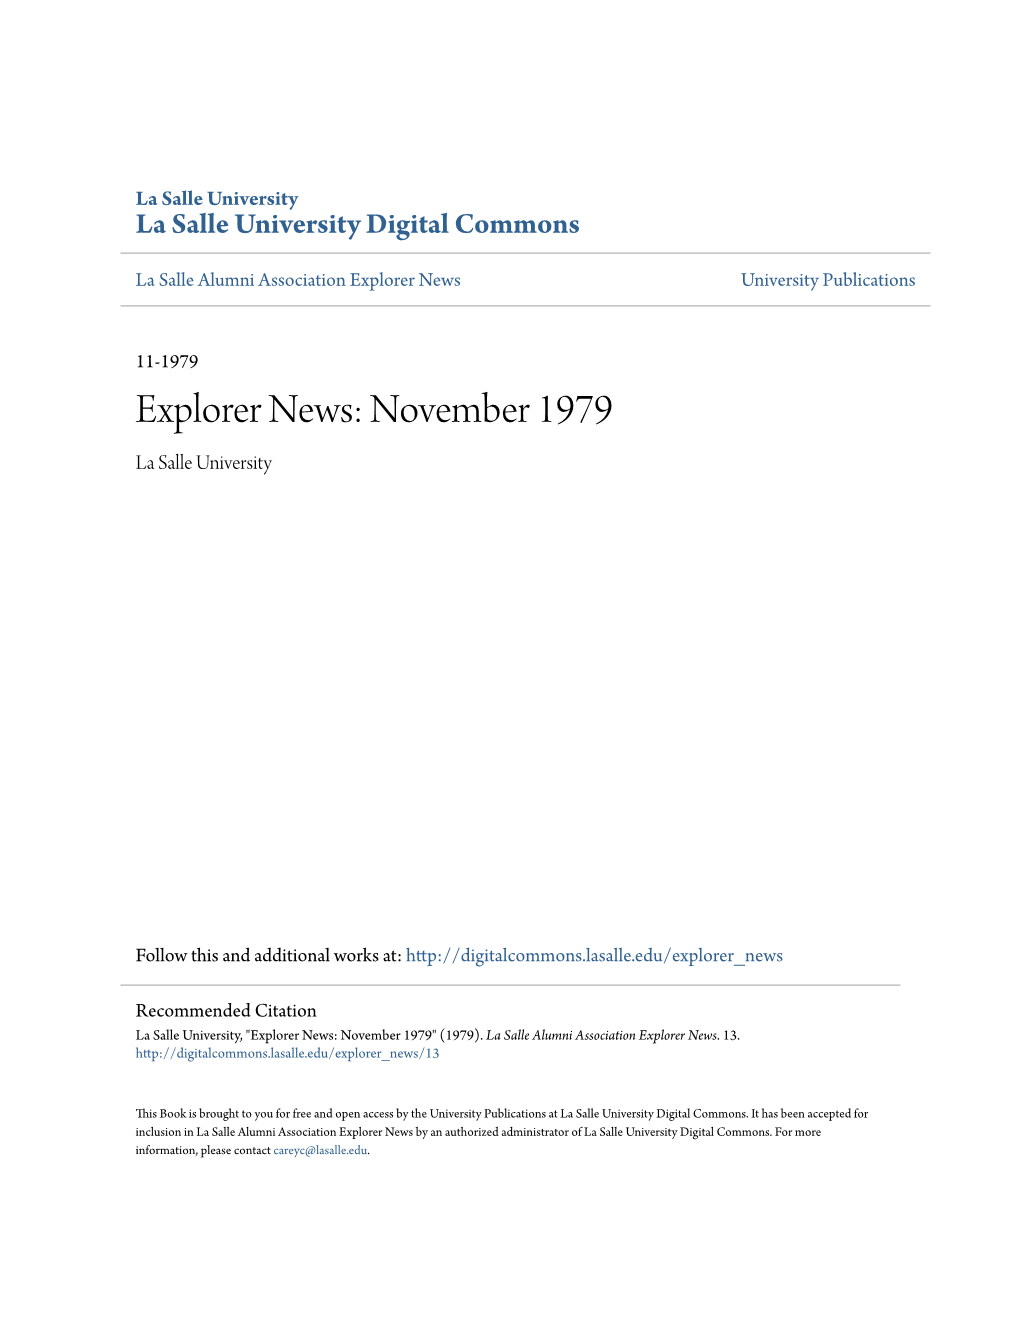 Explorer News: November 1979 La Salle University